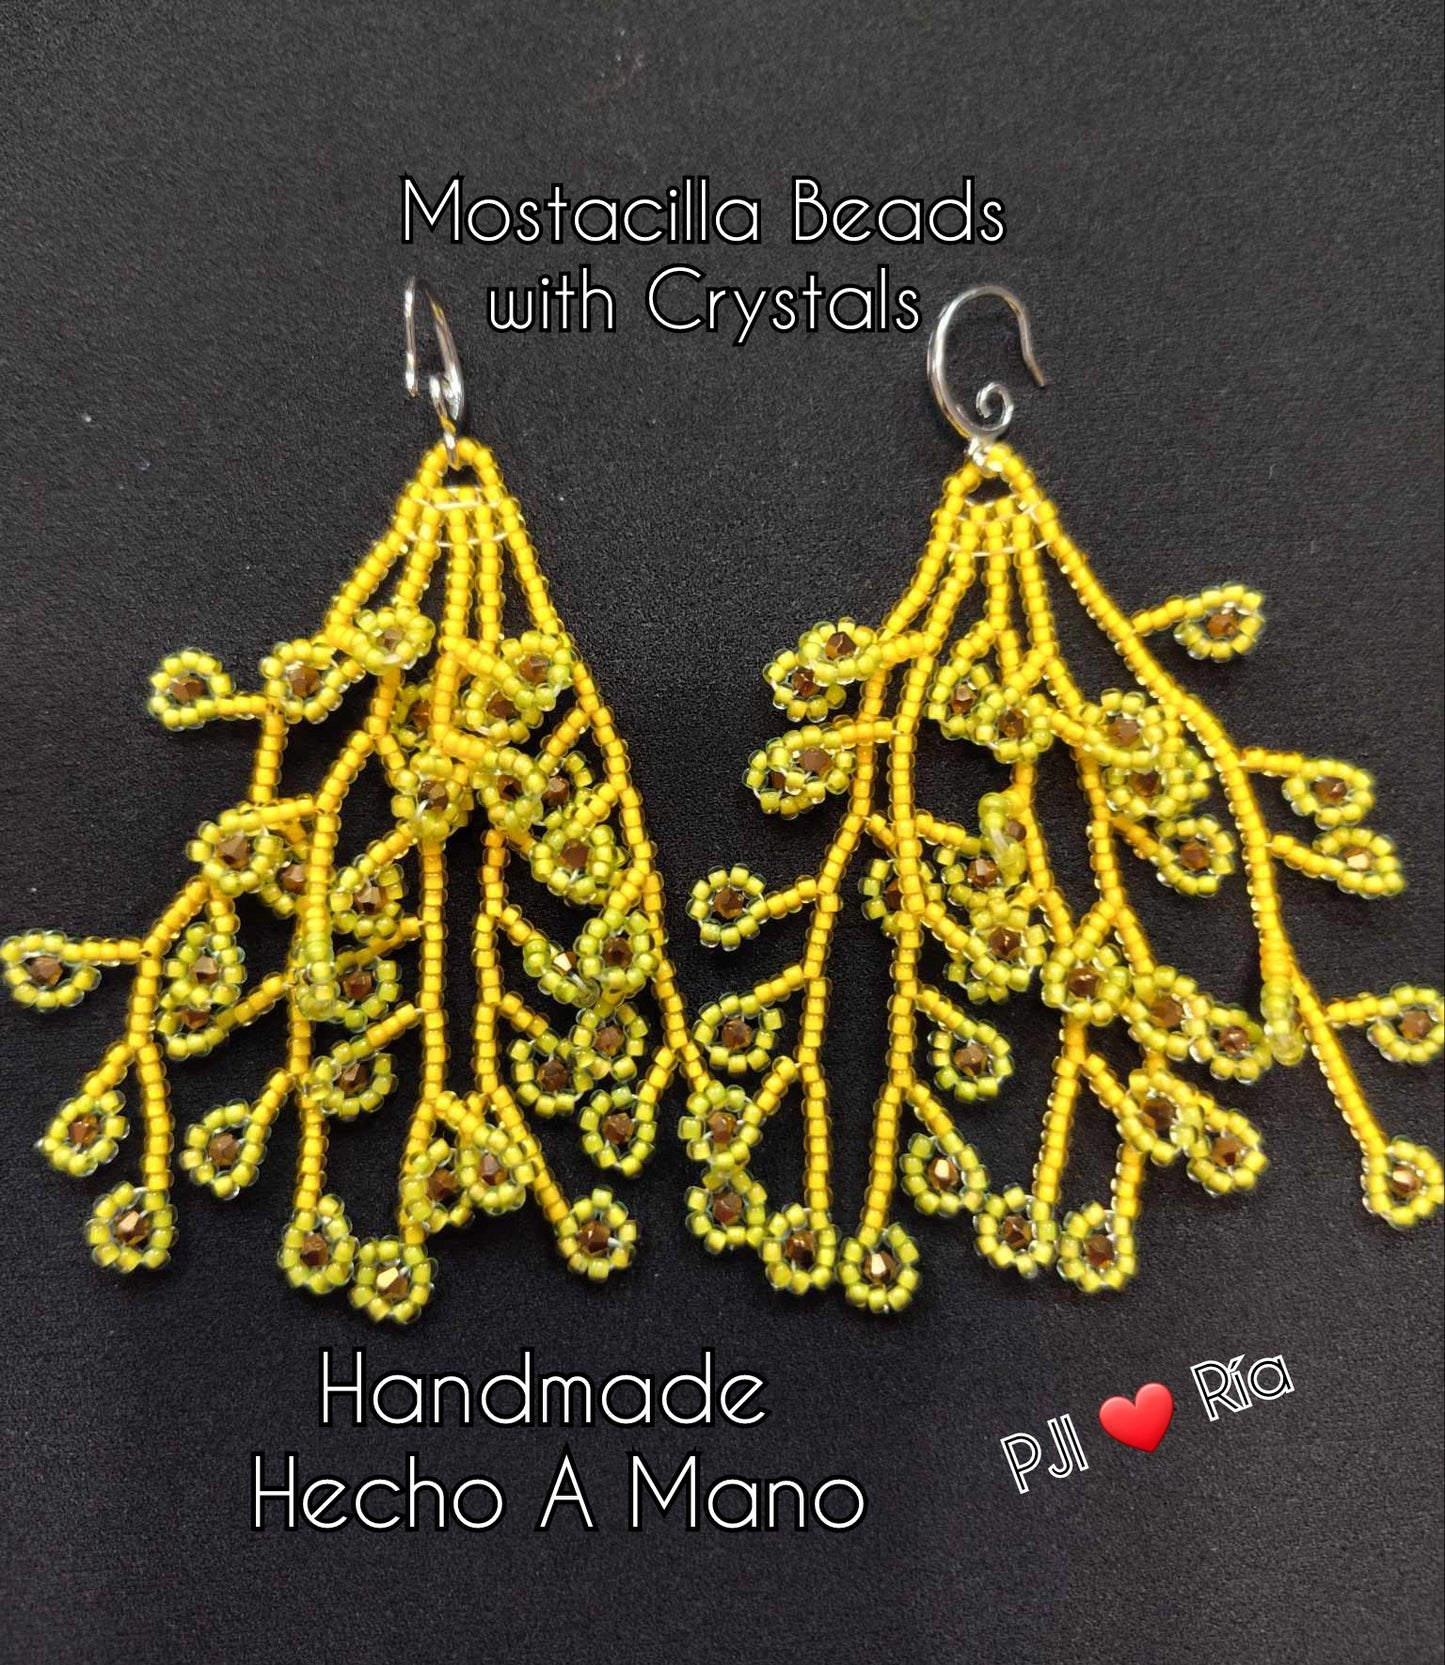 PJI❤️Ría Handmade Mostacilla Dangle Flower Crystal Beads